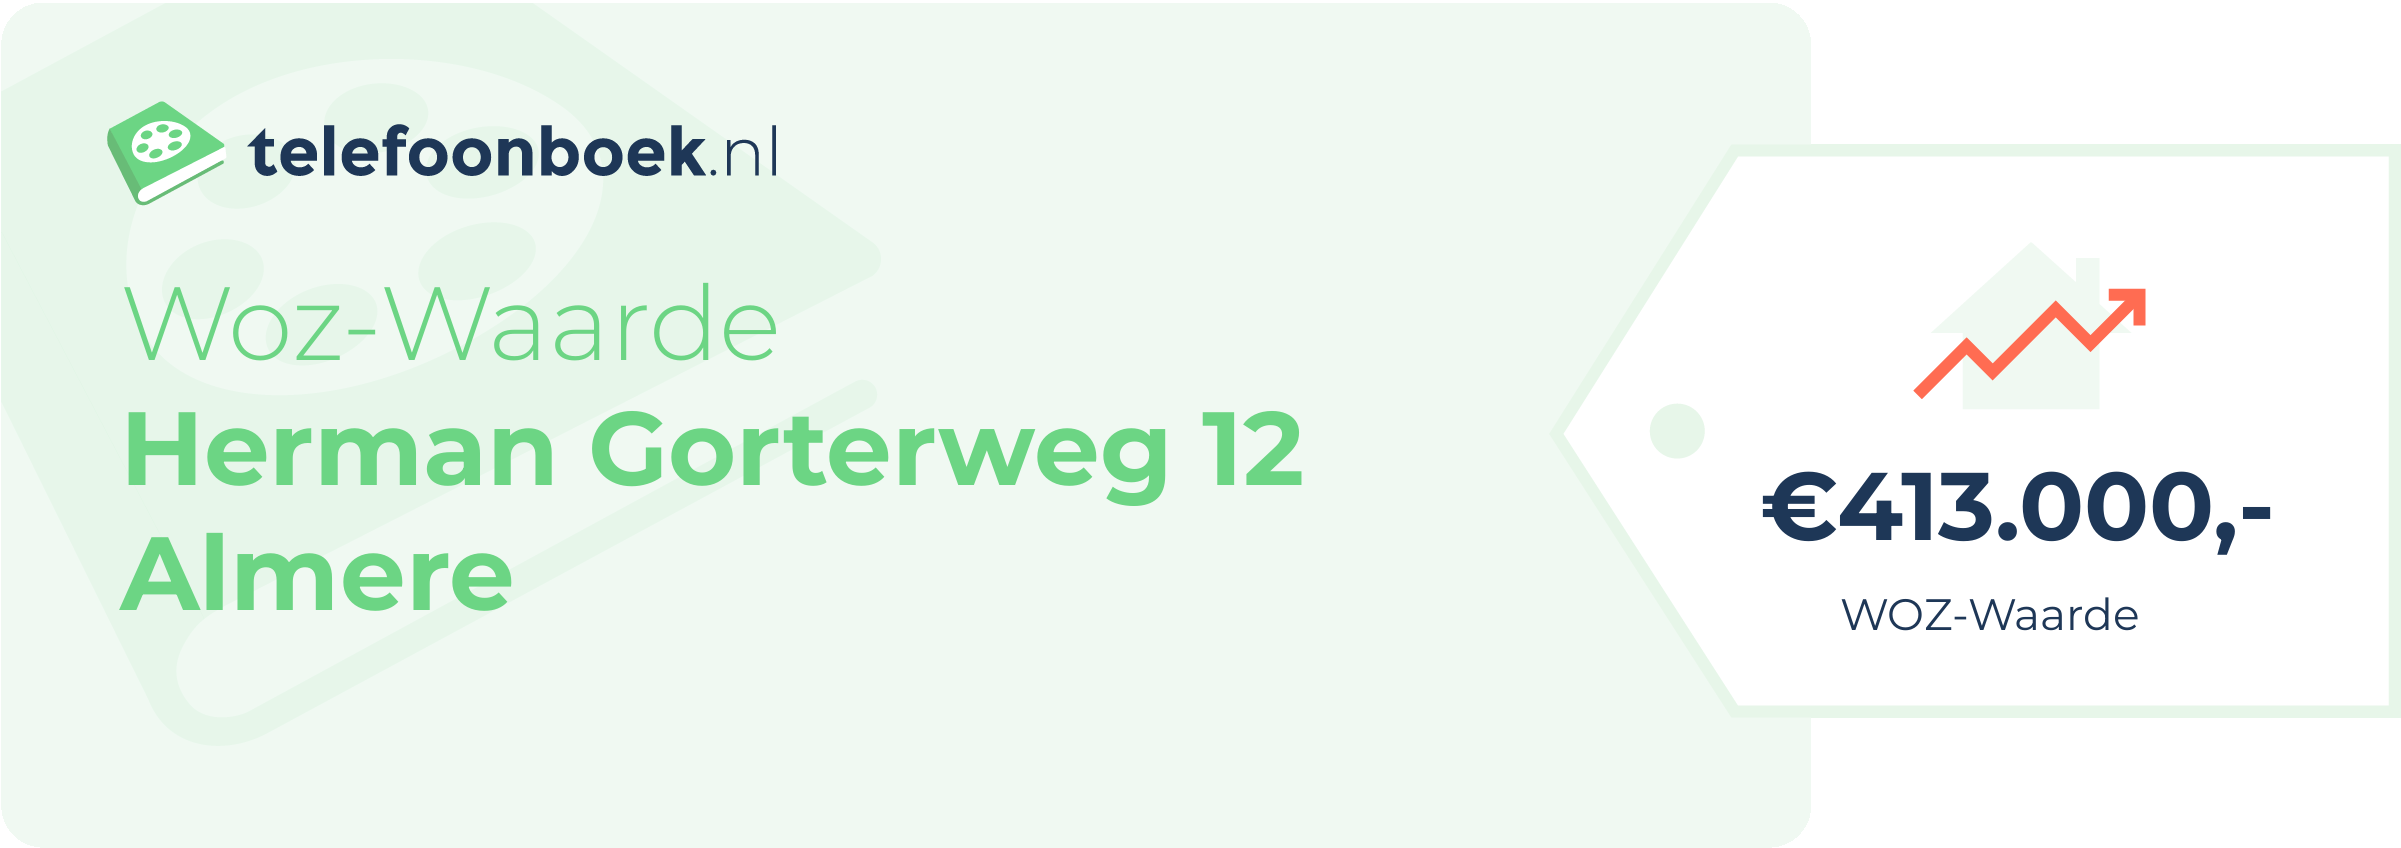 WOZ-waarde Herman Gorterweg 12 Almere